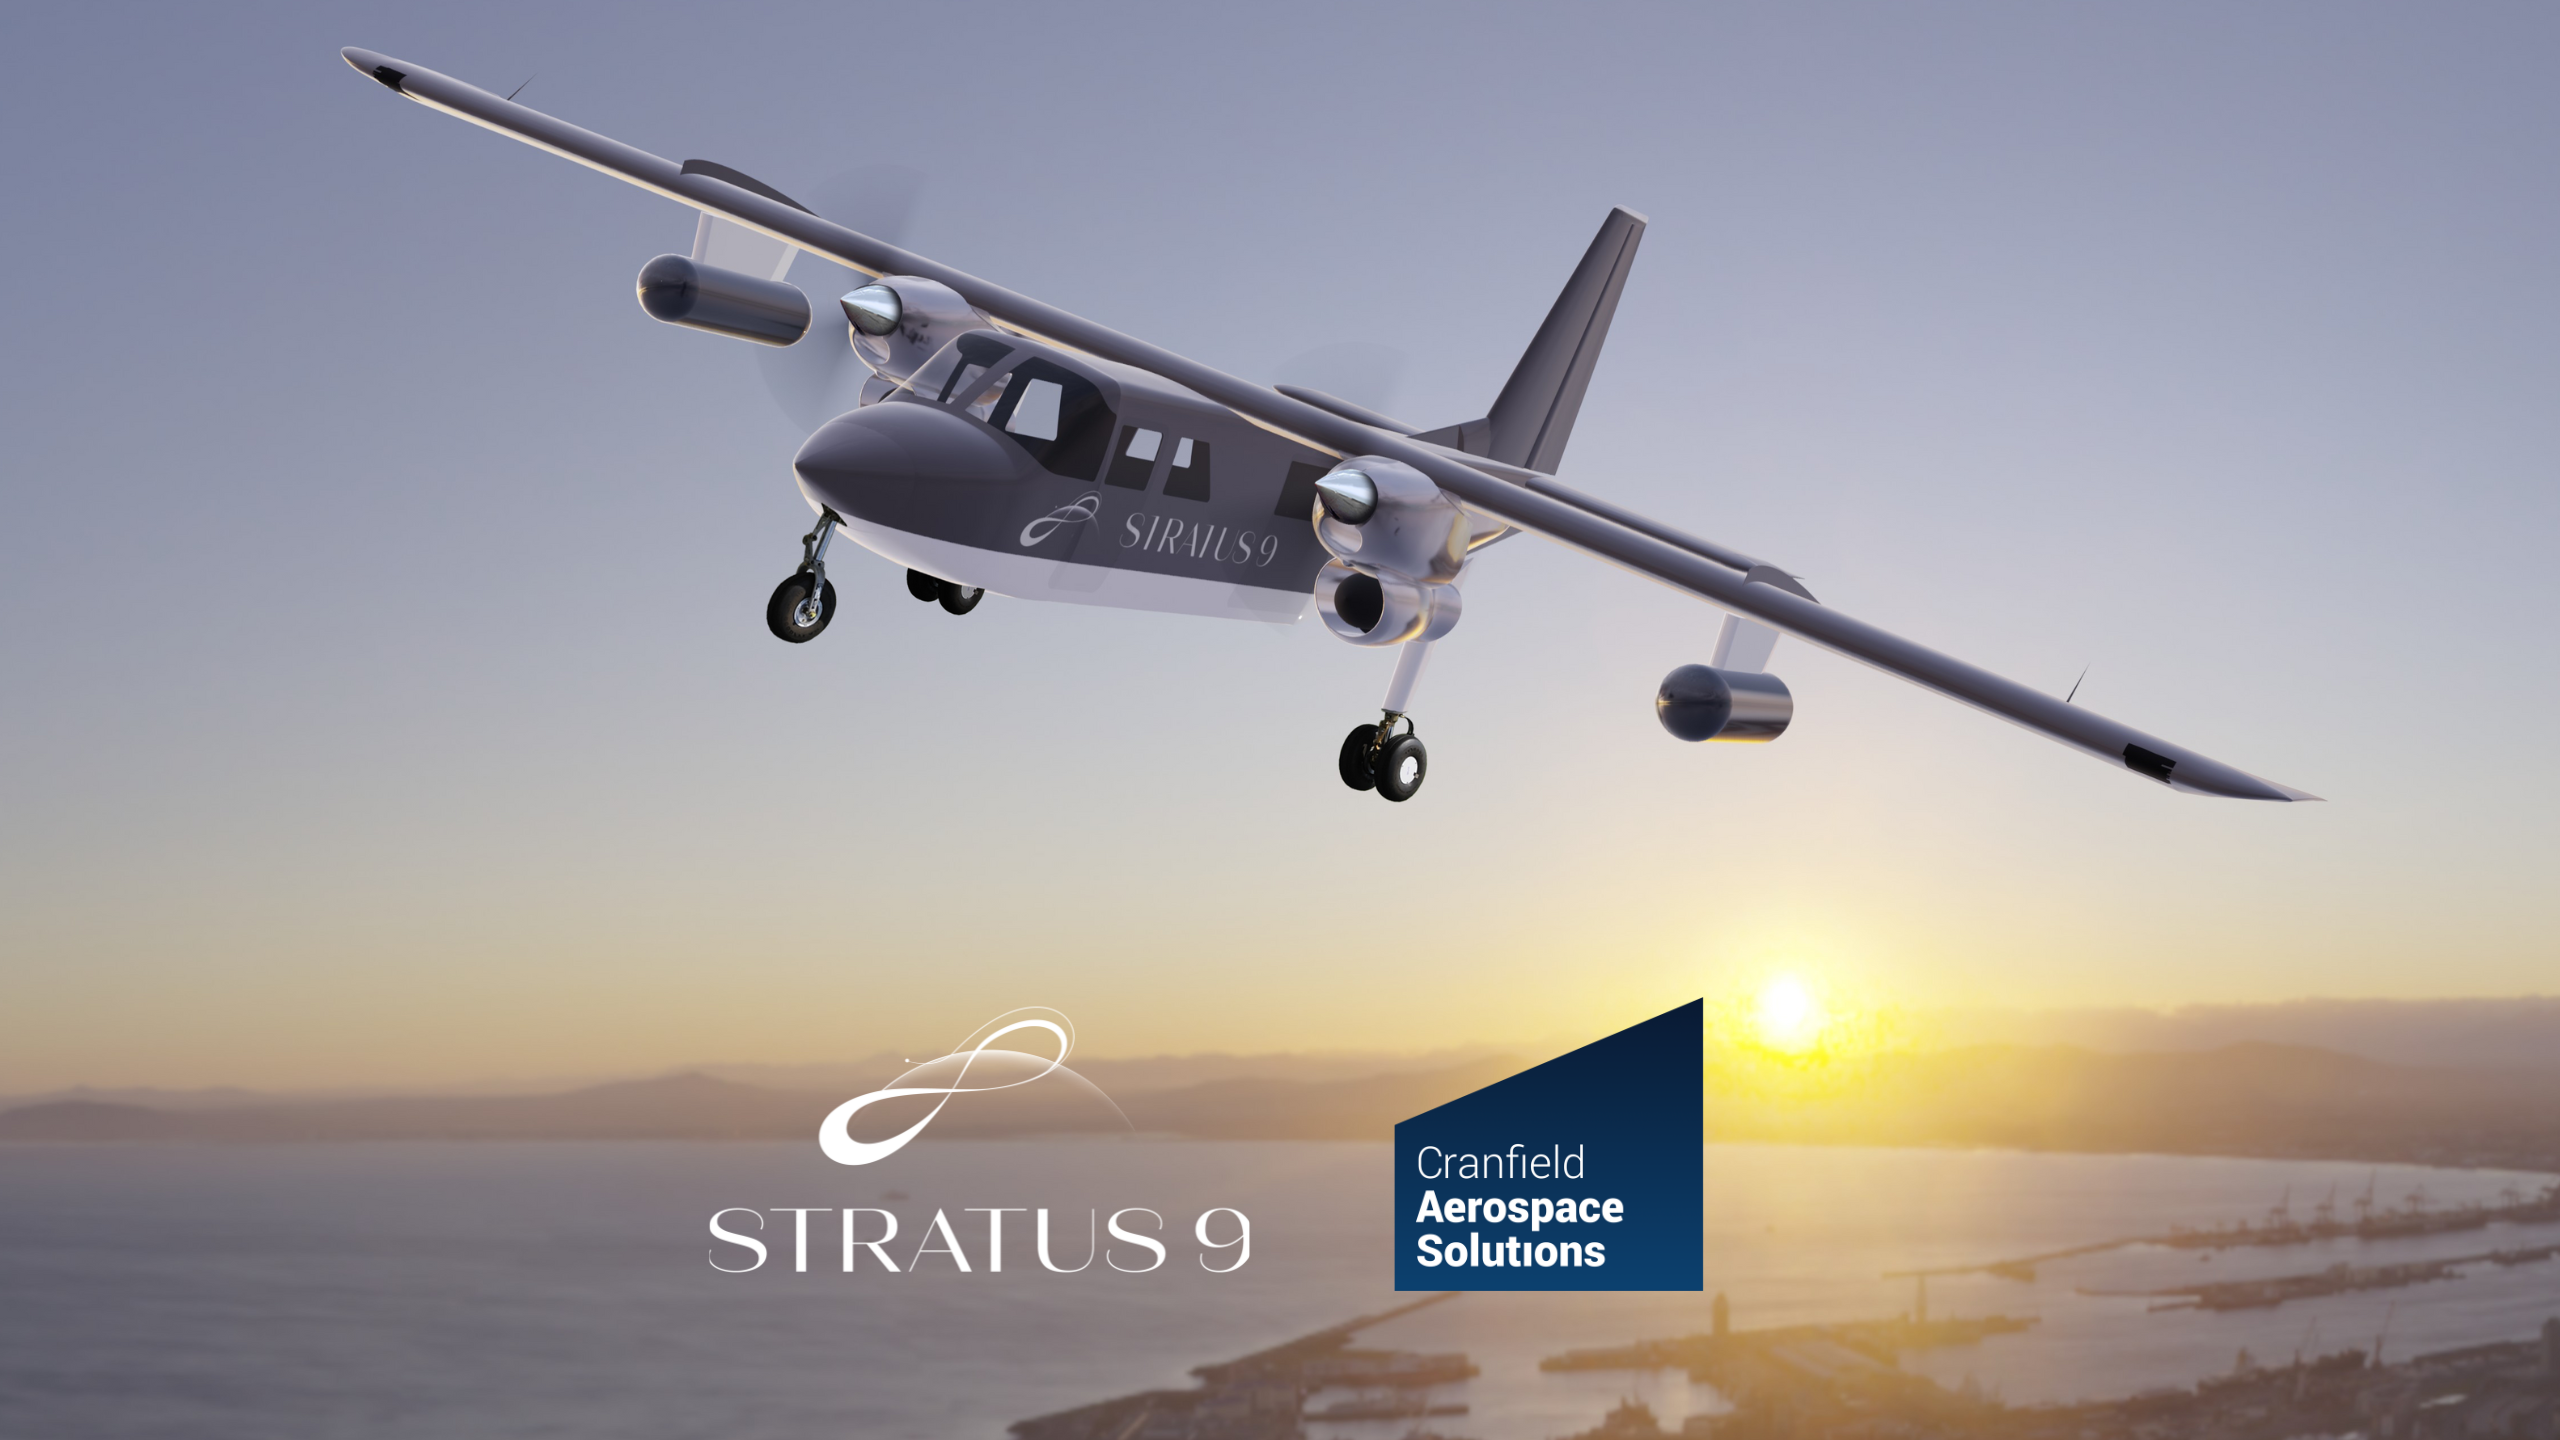 S9 & Cranfield Aerospace Solutions image